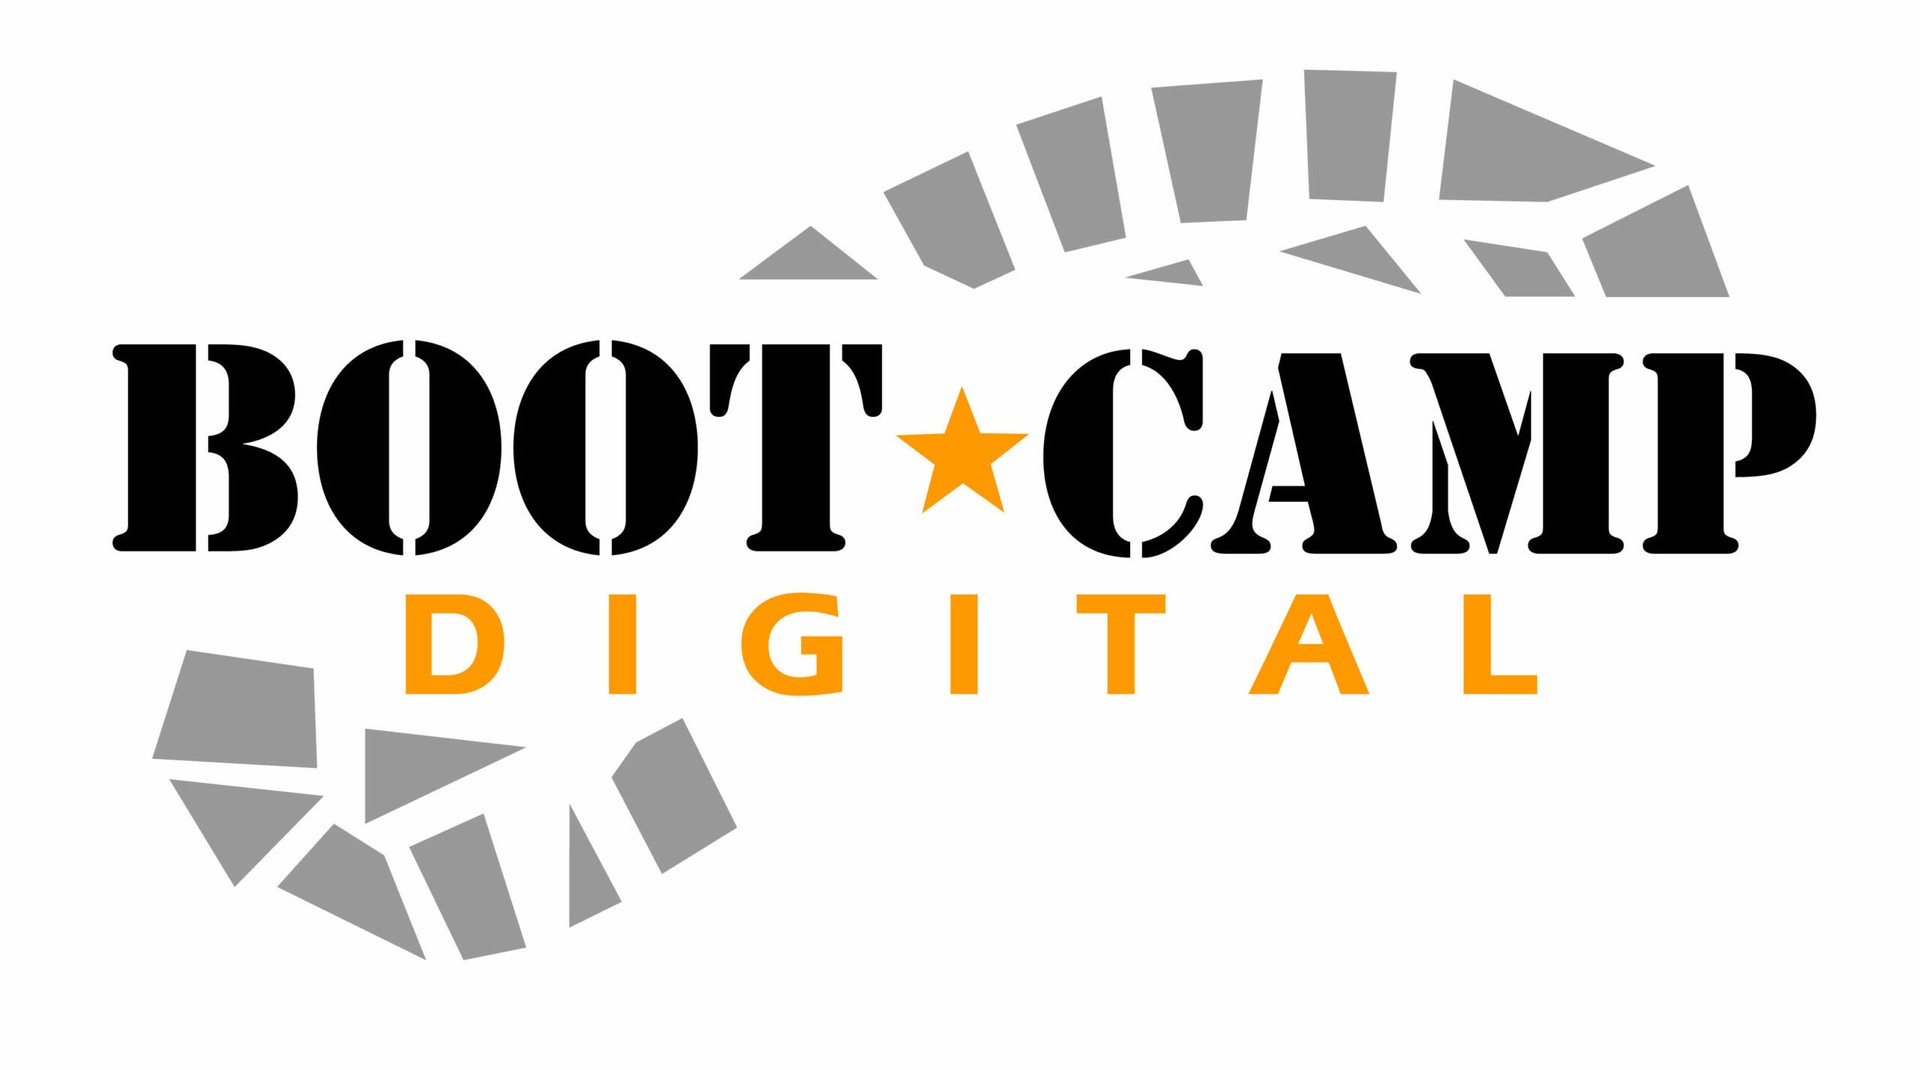 Digital marketing courses in Dubai - Bootcamp Digital